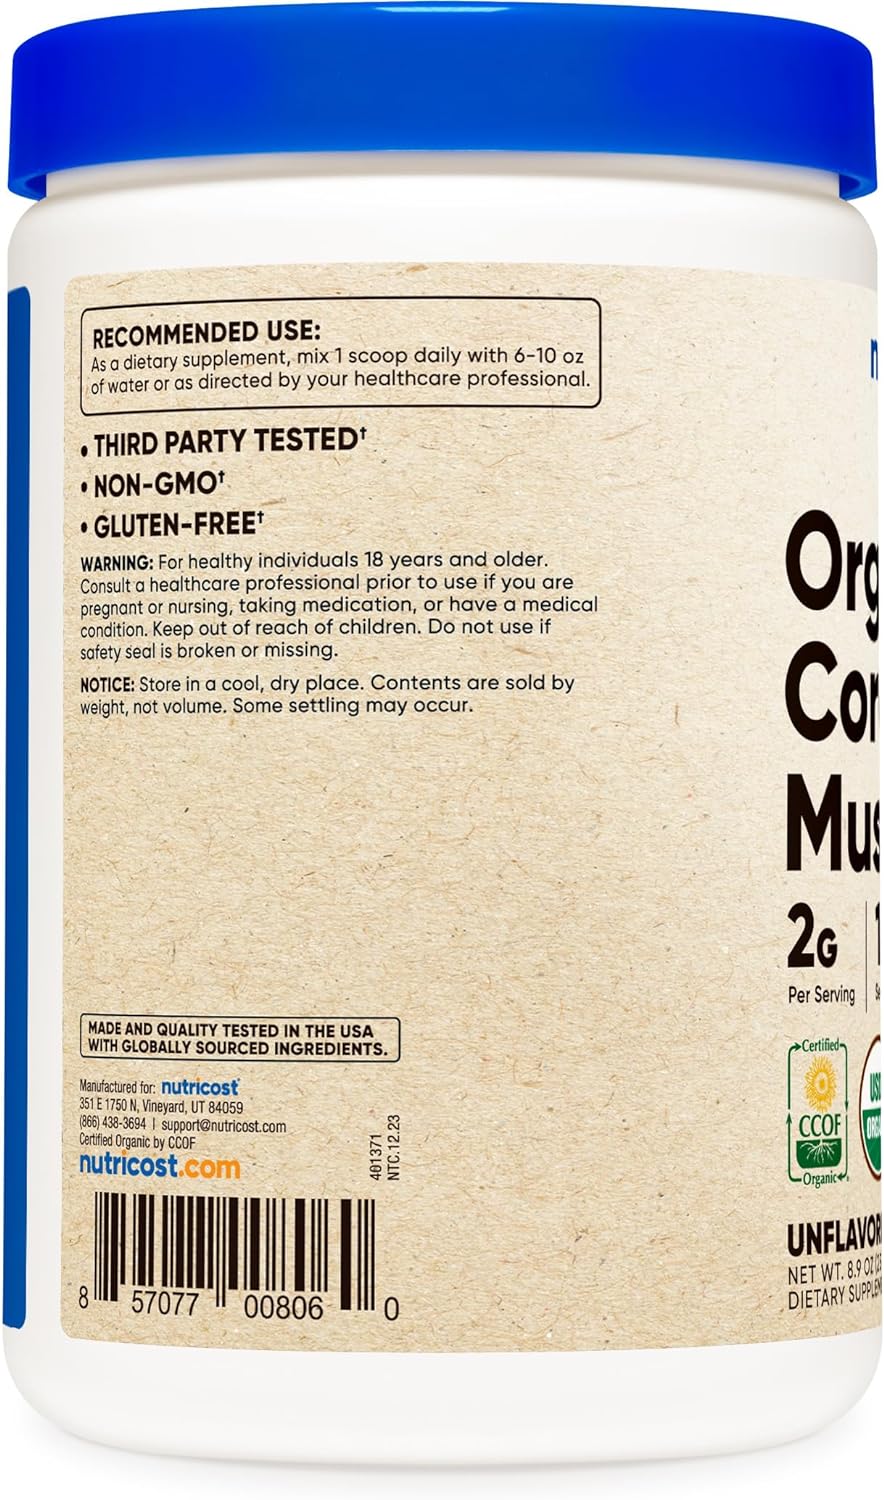 Nutricost Organic Cordyceps Mushroom Powder 250 Grams - USDA Certified Organic, Non-GMO, Gluten Free